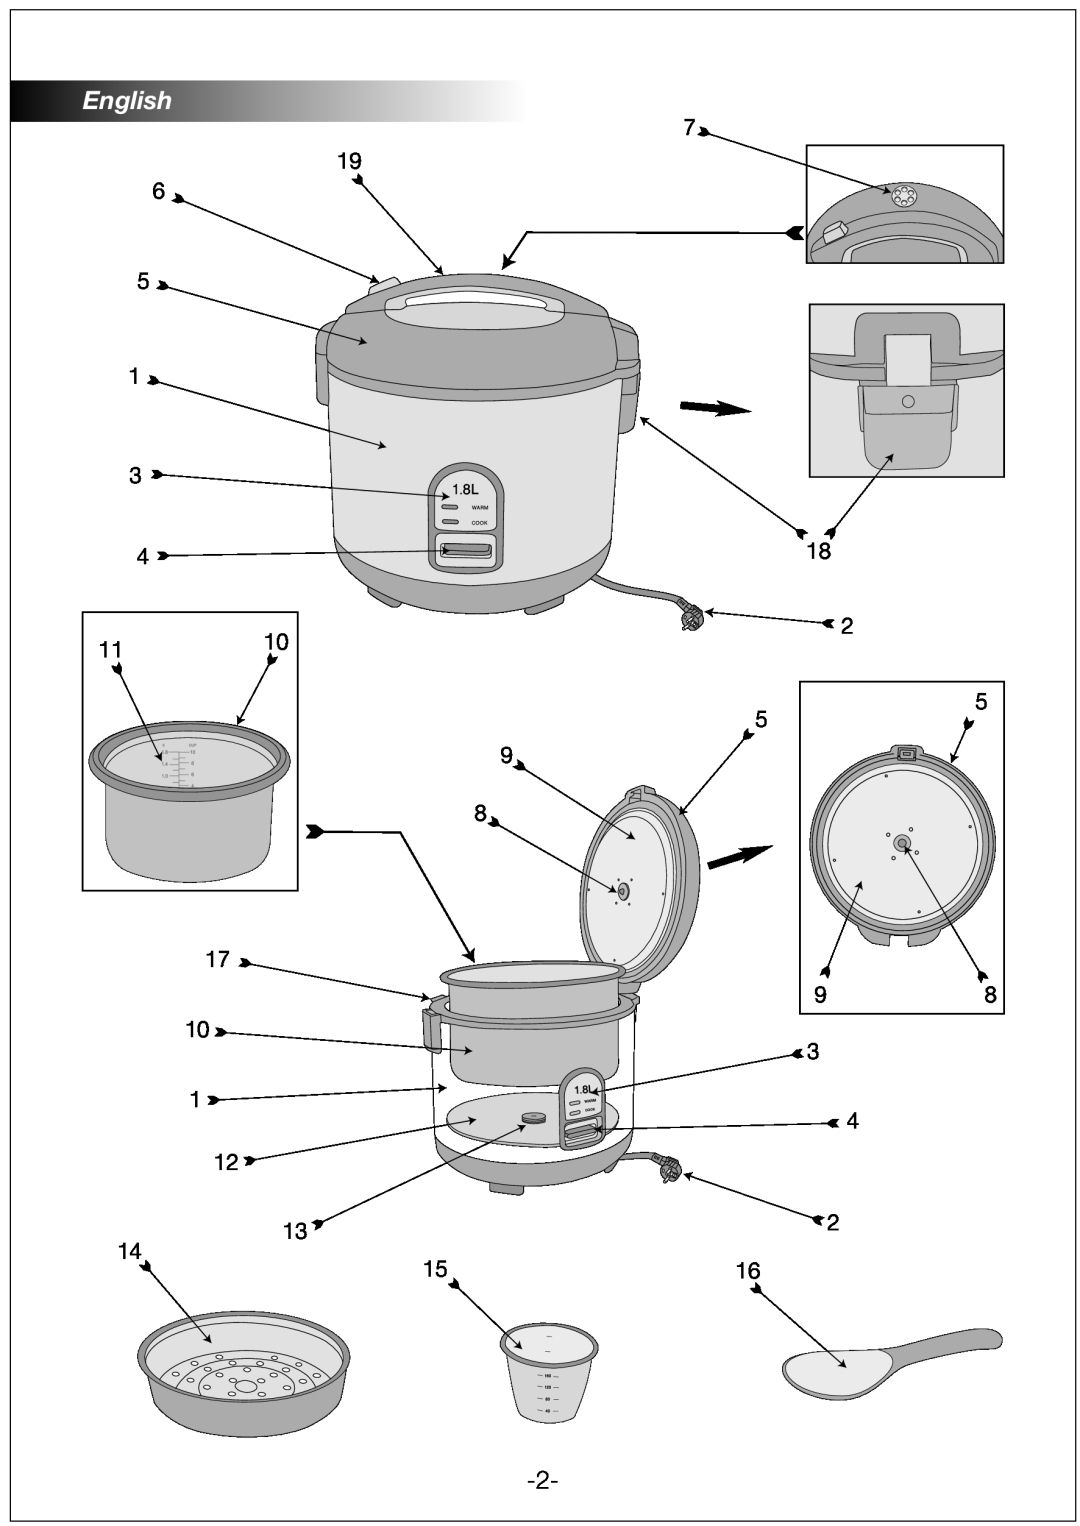 Black & Decker RC1820 manual English, 1.8L, Warm, Cook 